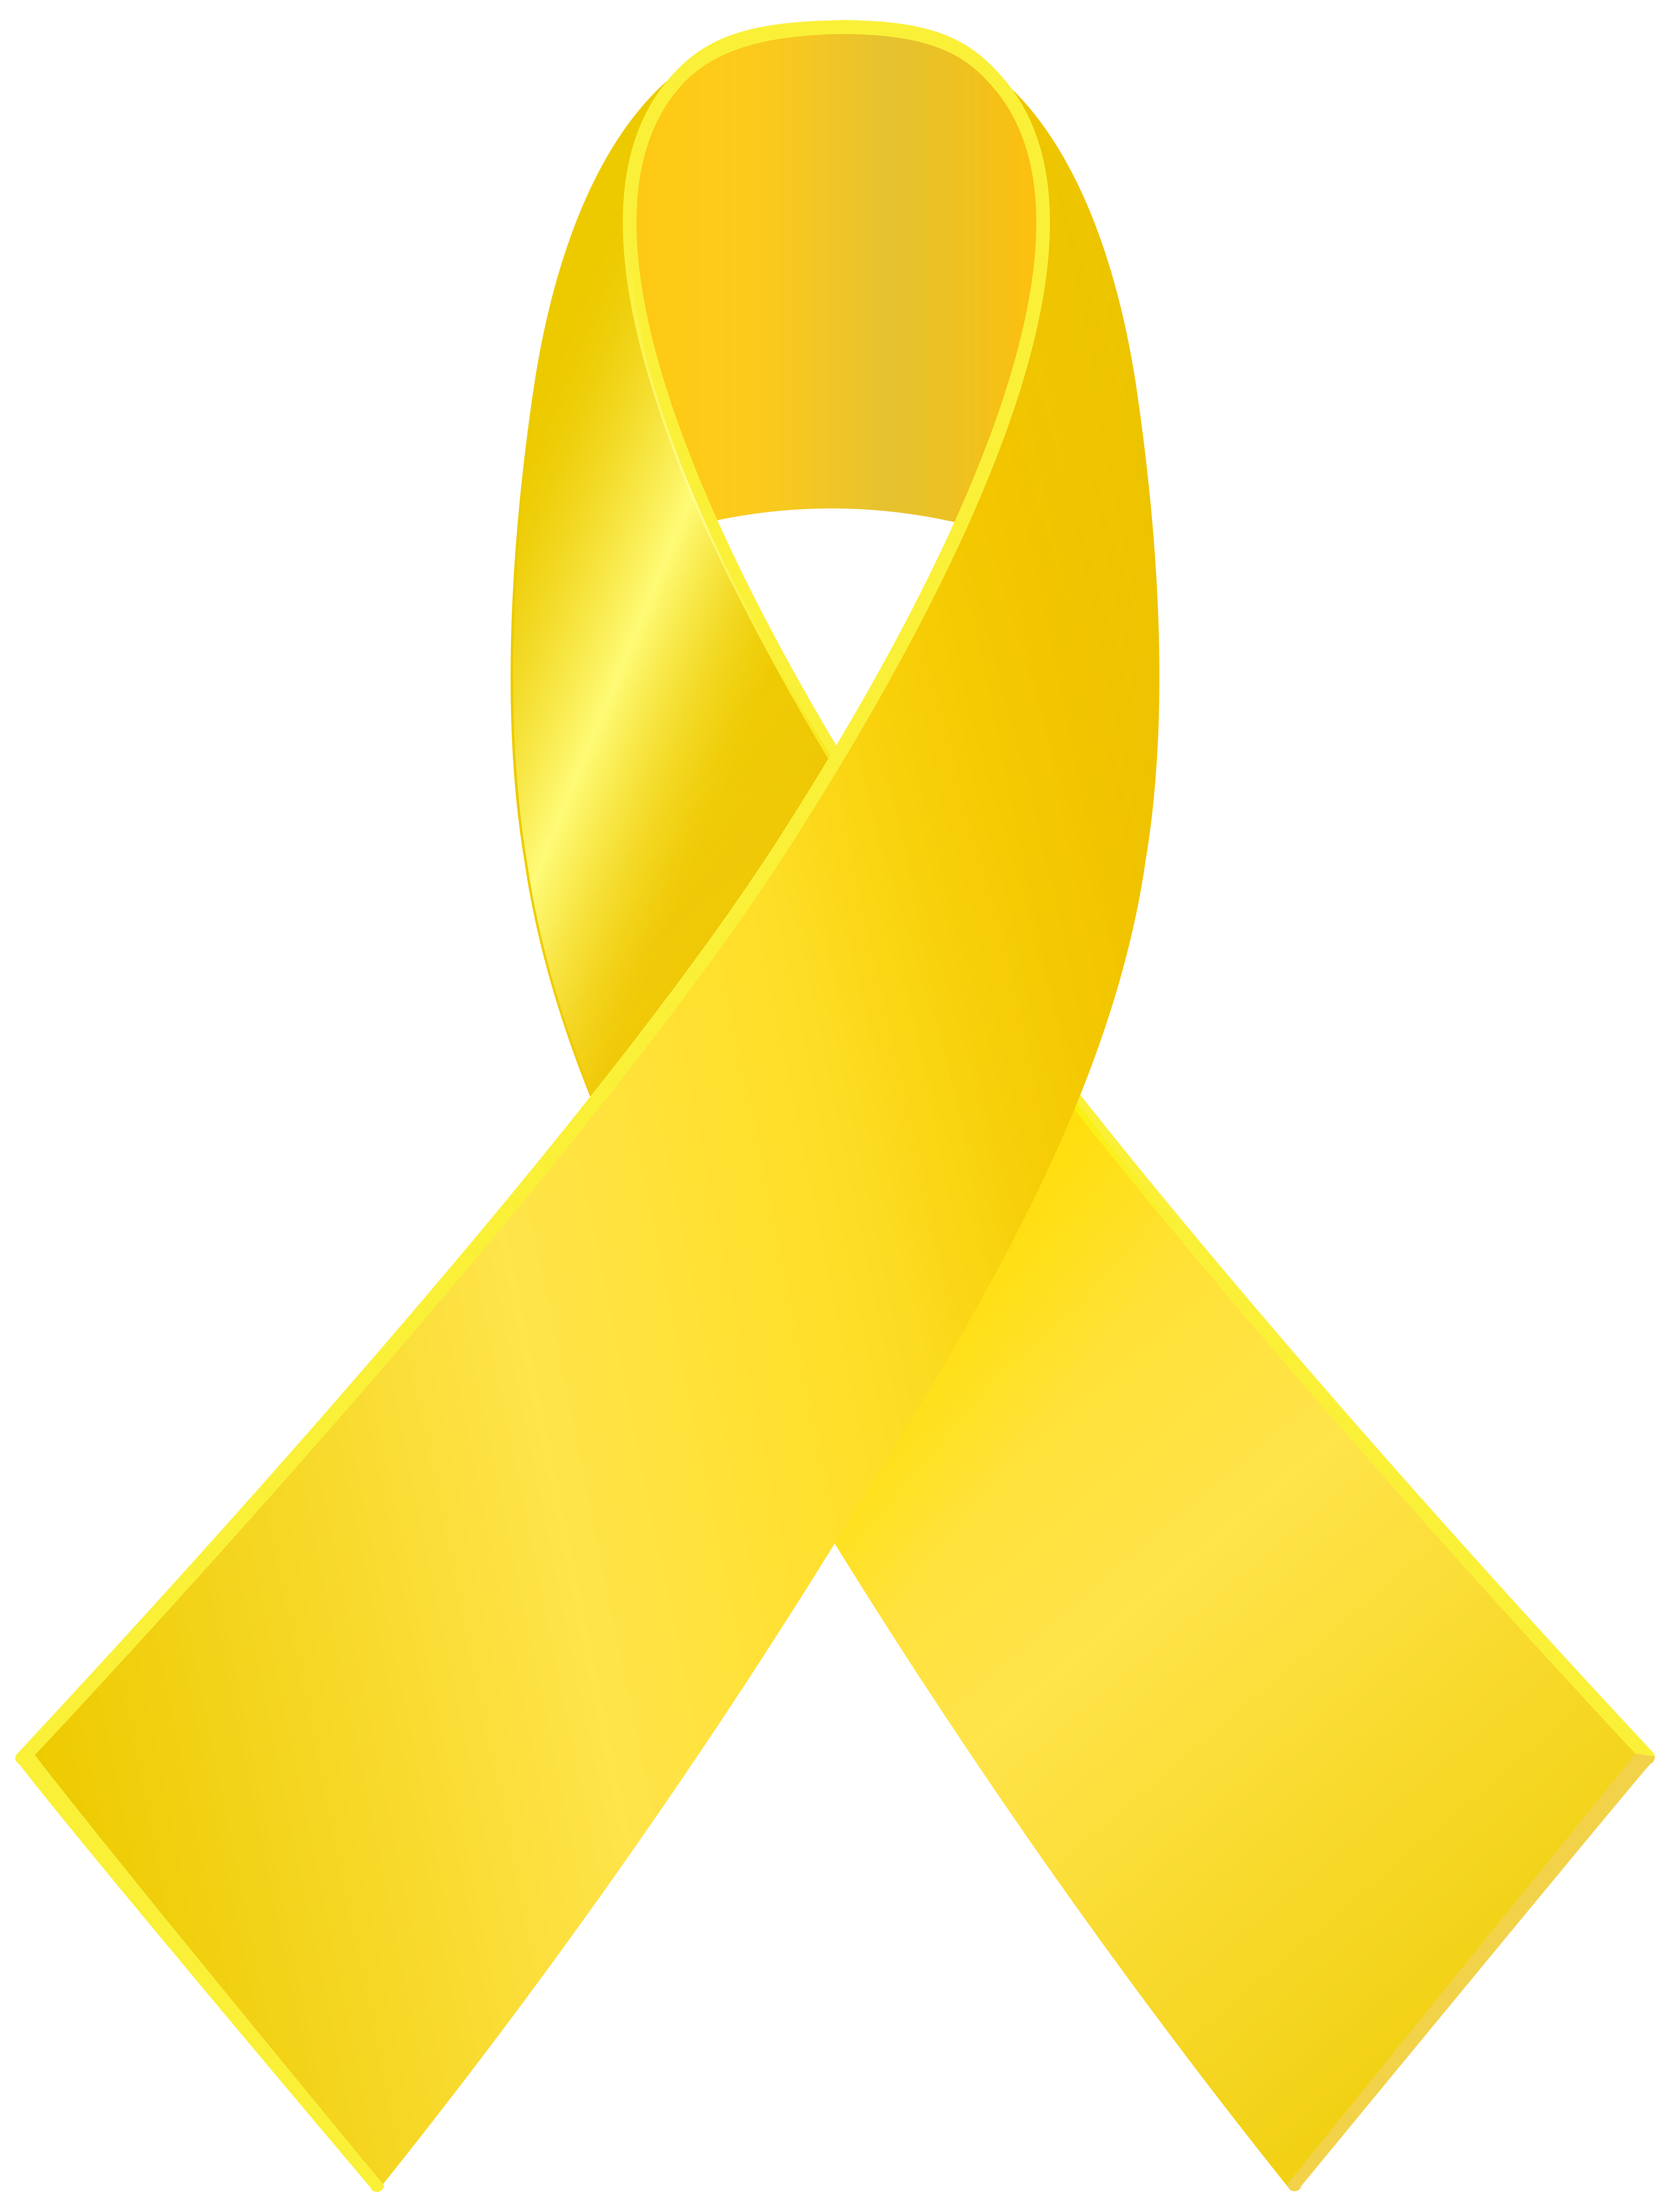 yellow ribbon clipart